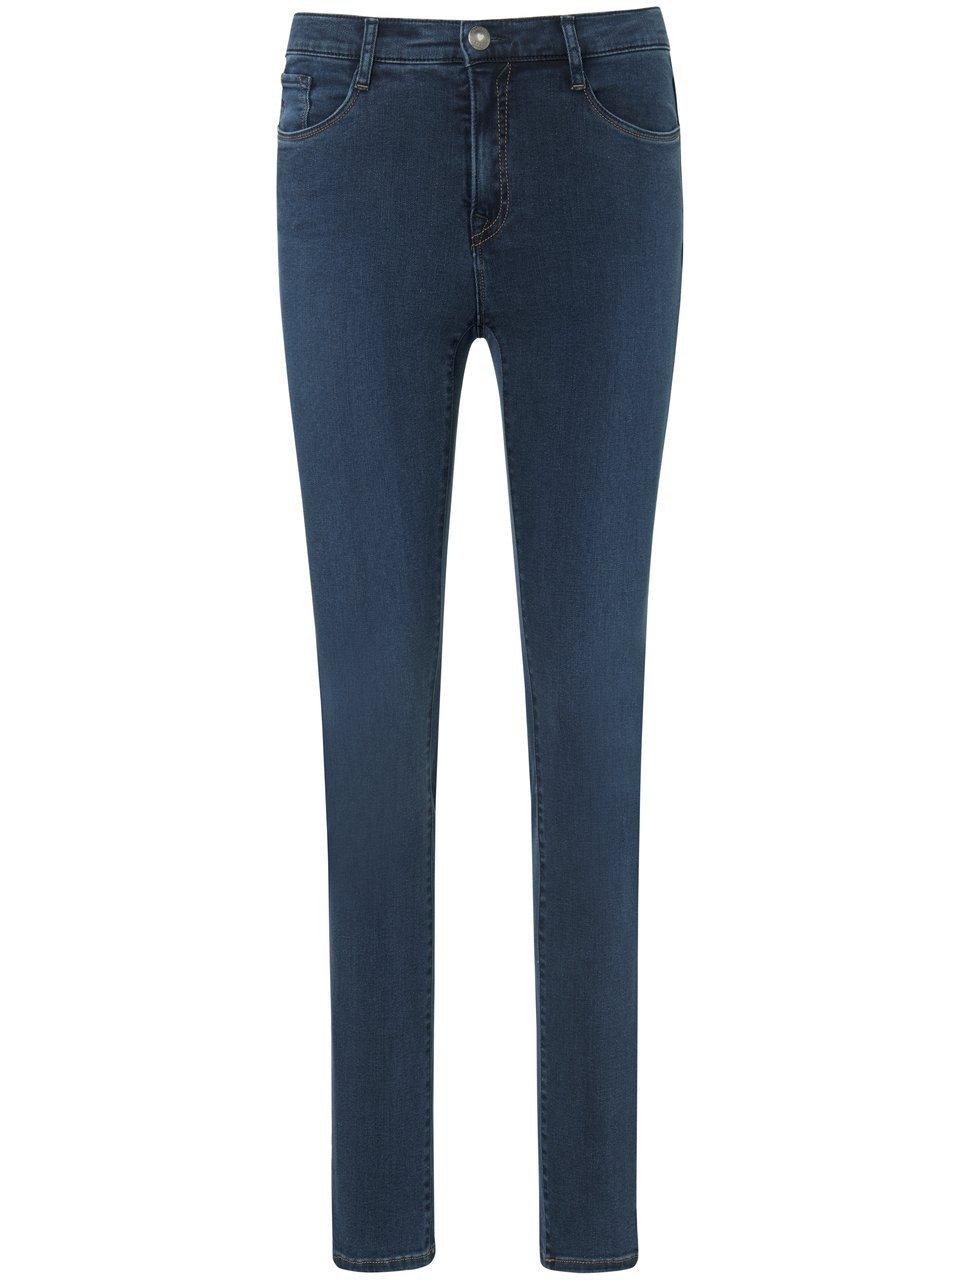 Feminine Fit-jeans model Nicola Van Brax Feel Good denim